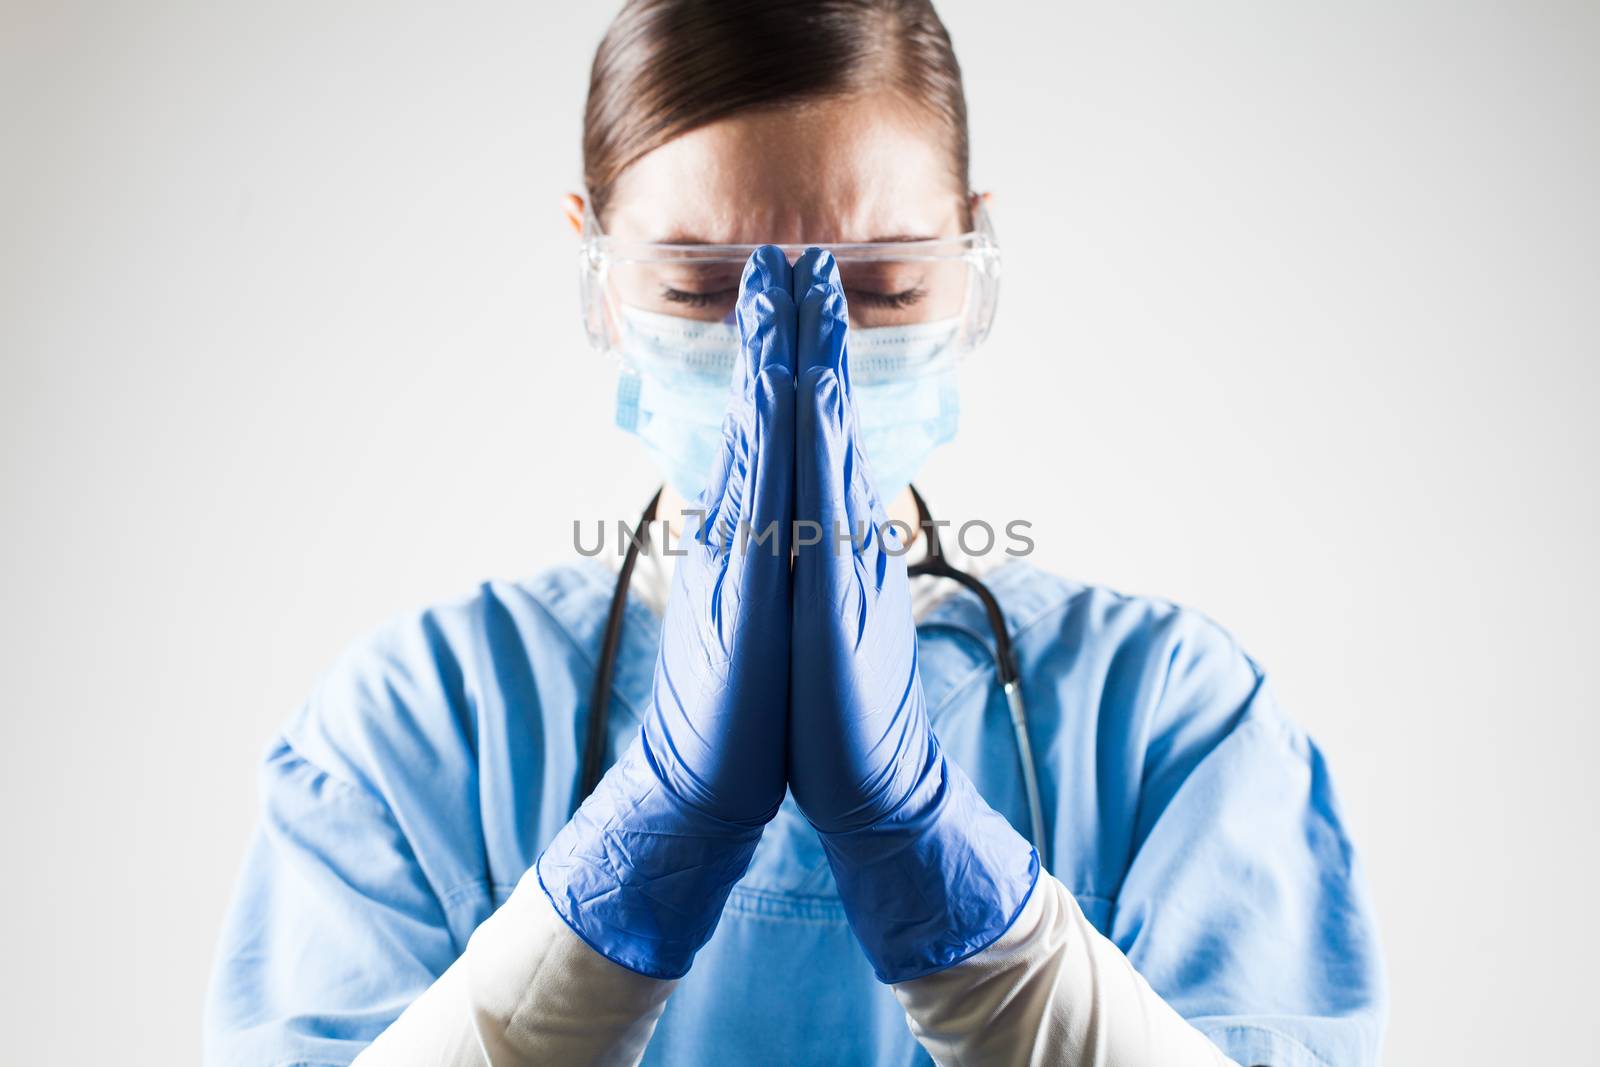 Female doctor praying hands gesture by Plyushkin